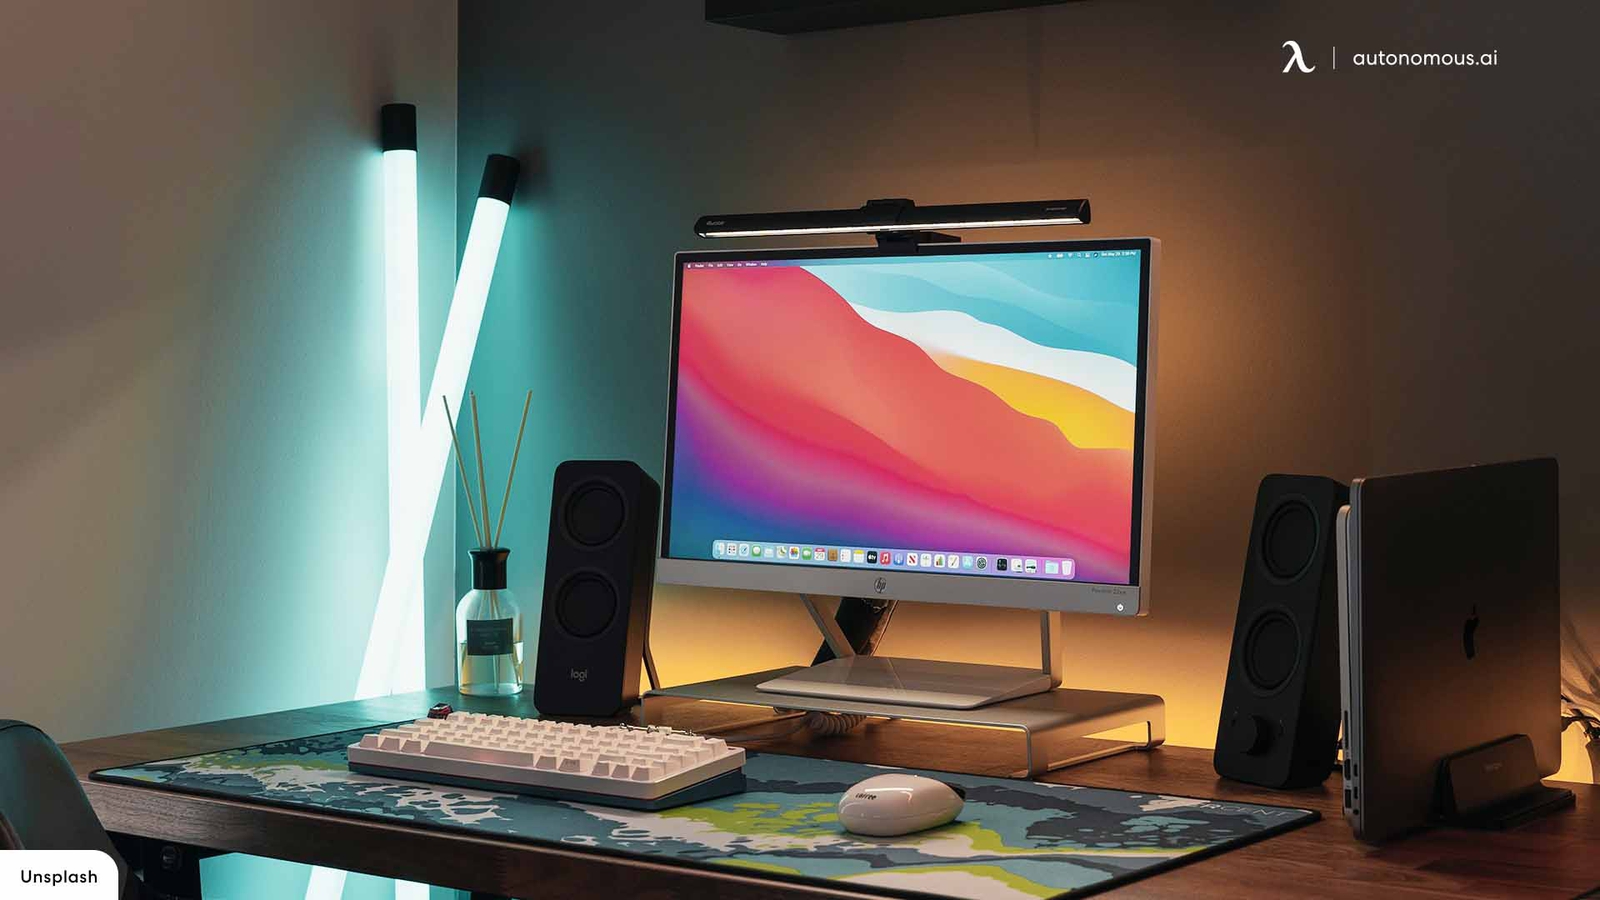 10 Computer Light Bars for Desks to Improve Lighting Ergonomics